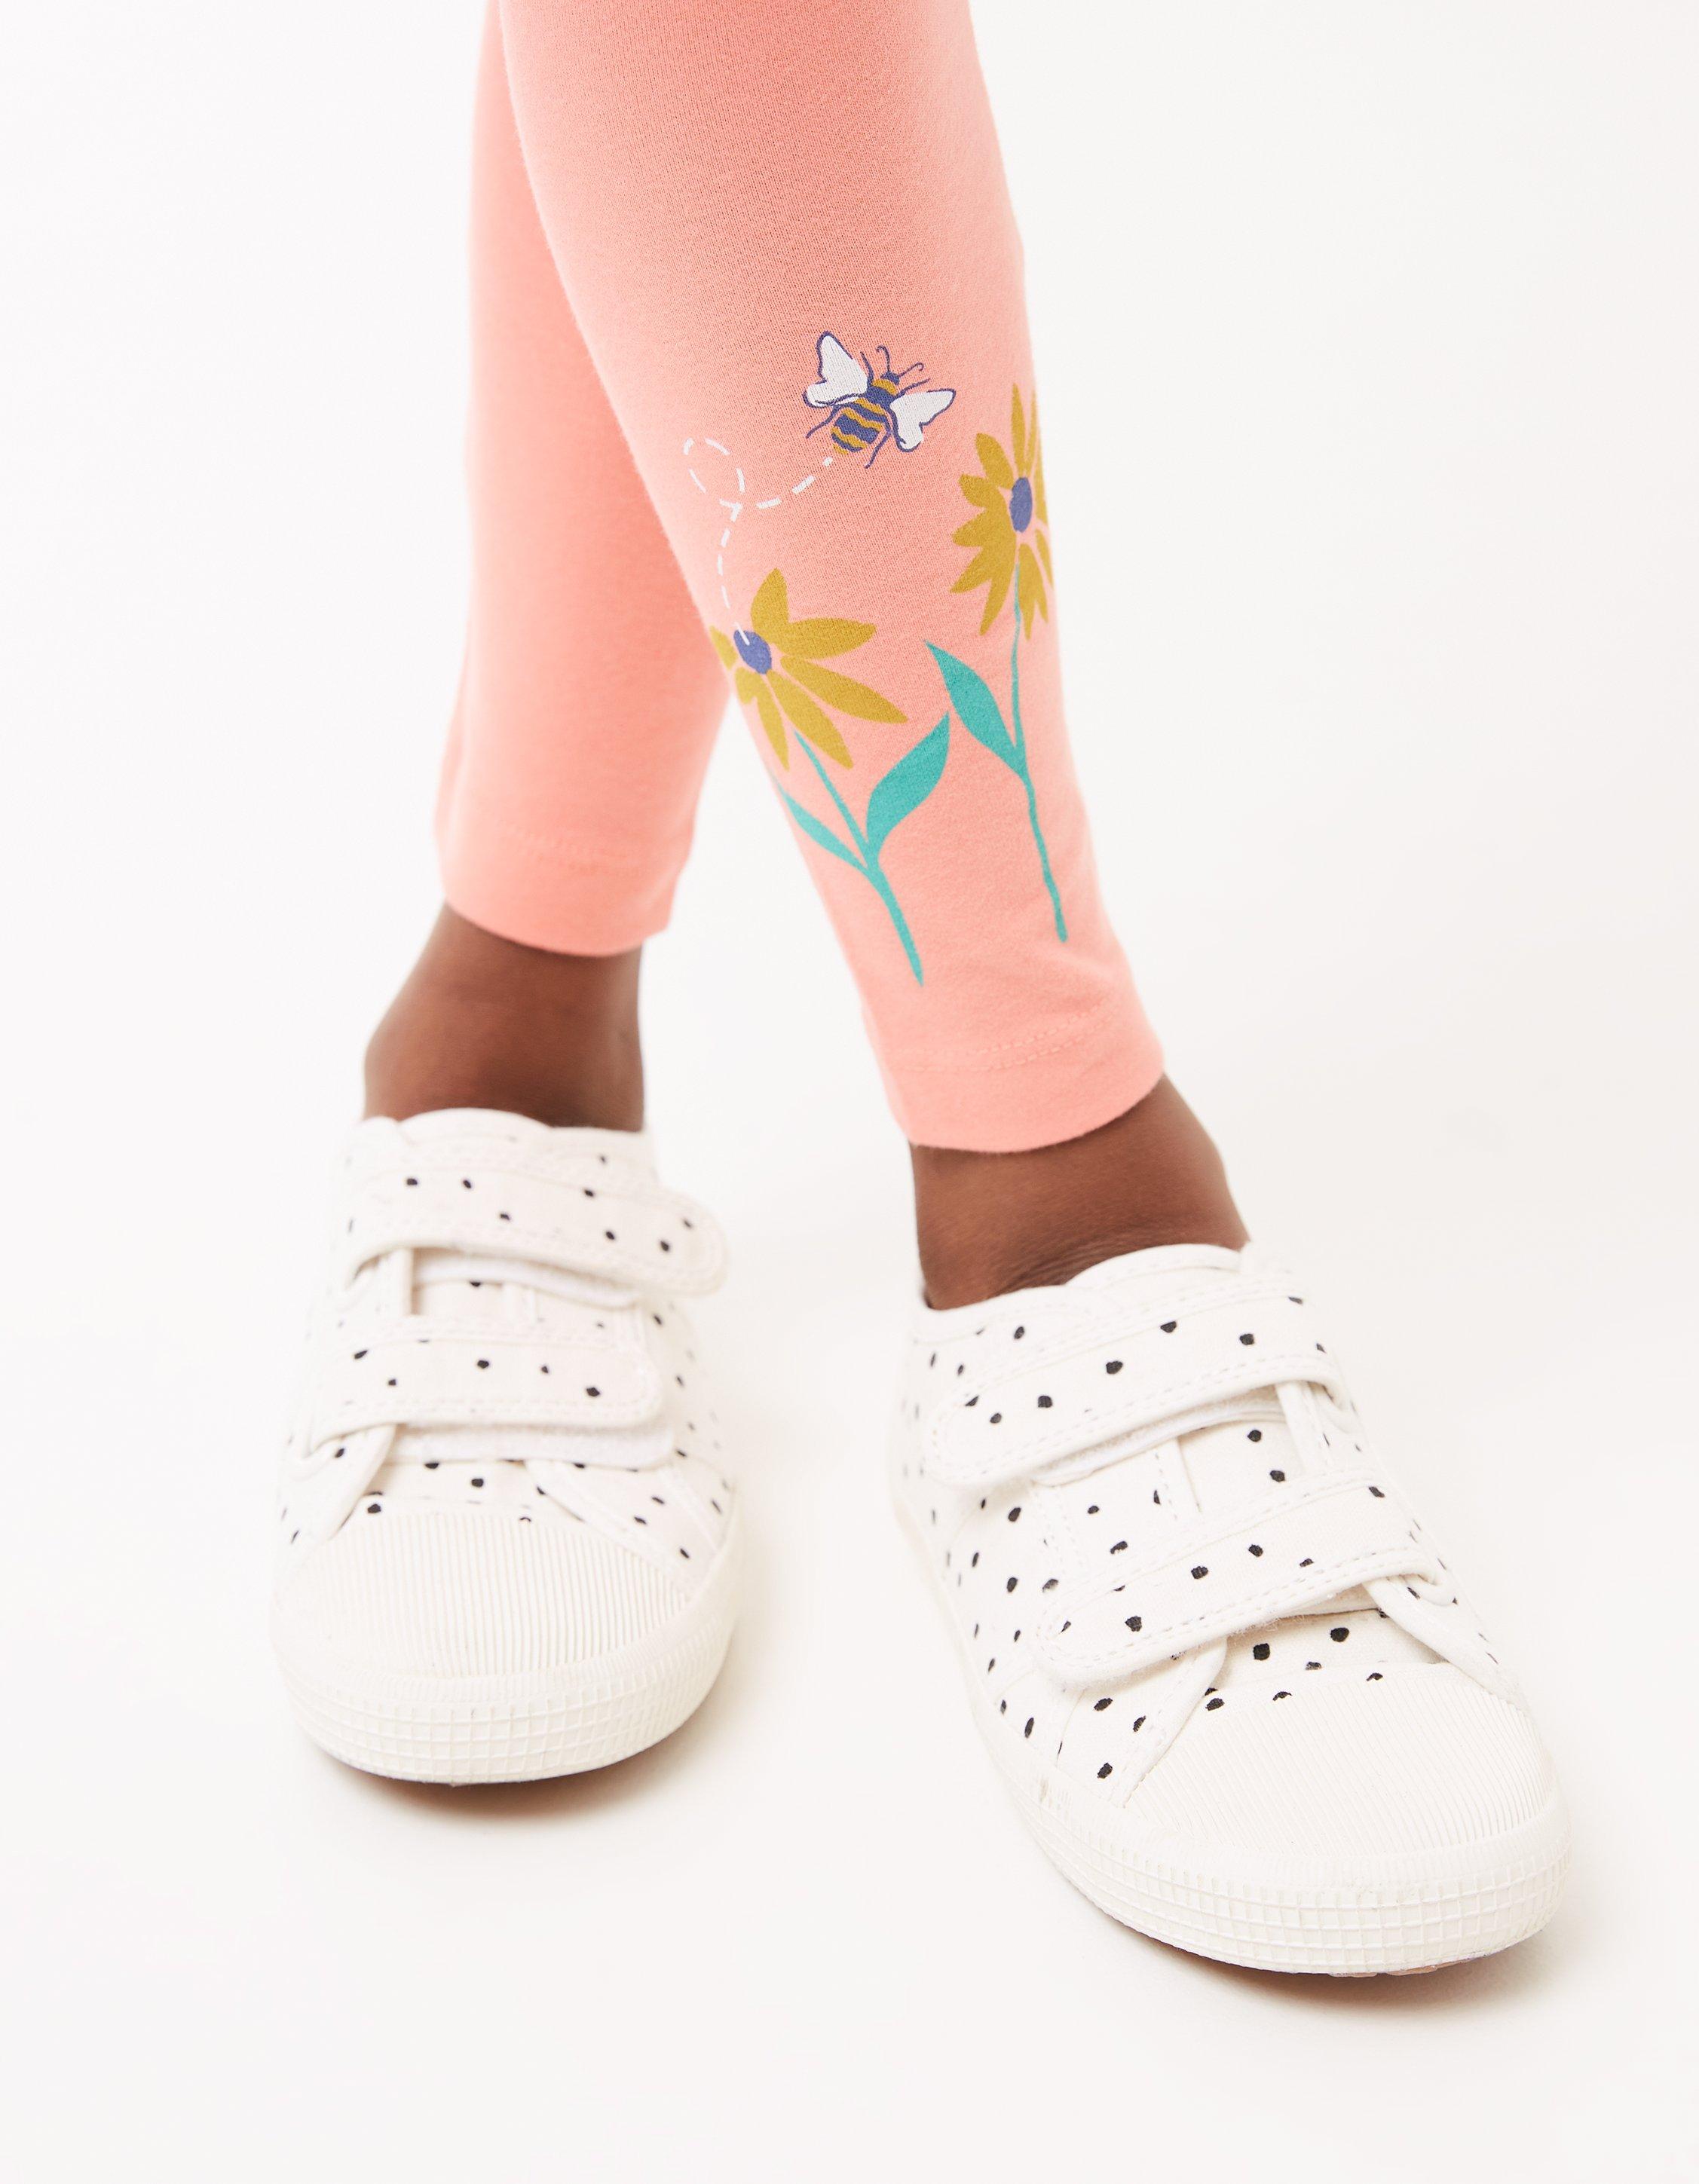 Girls' Leggings: cropped leggings, stretch cotton leggings, printed leggings  at GapKids, Gap